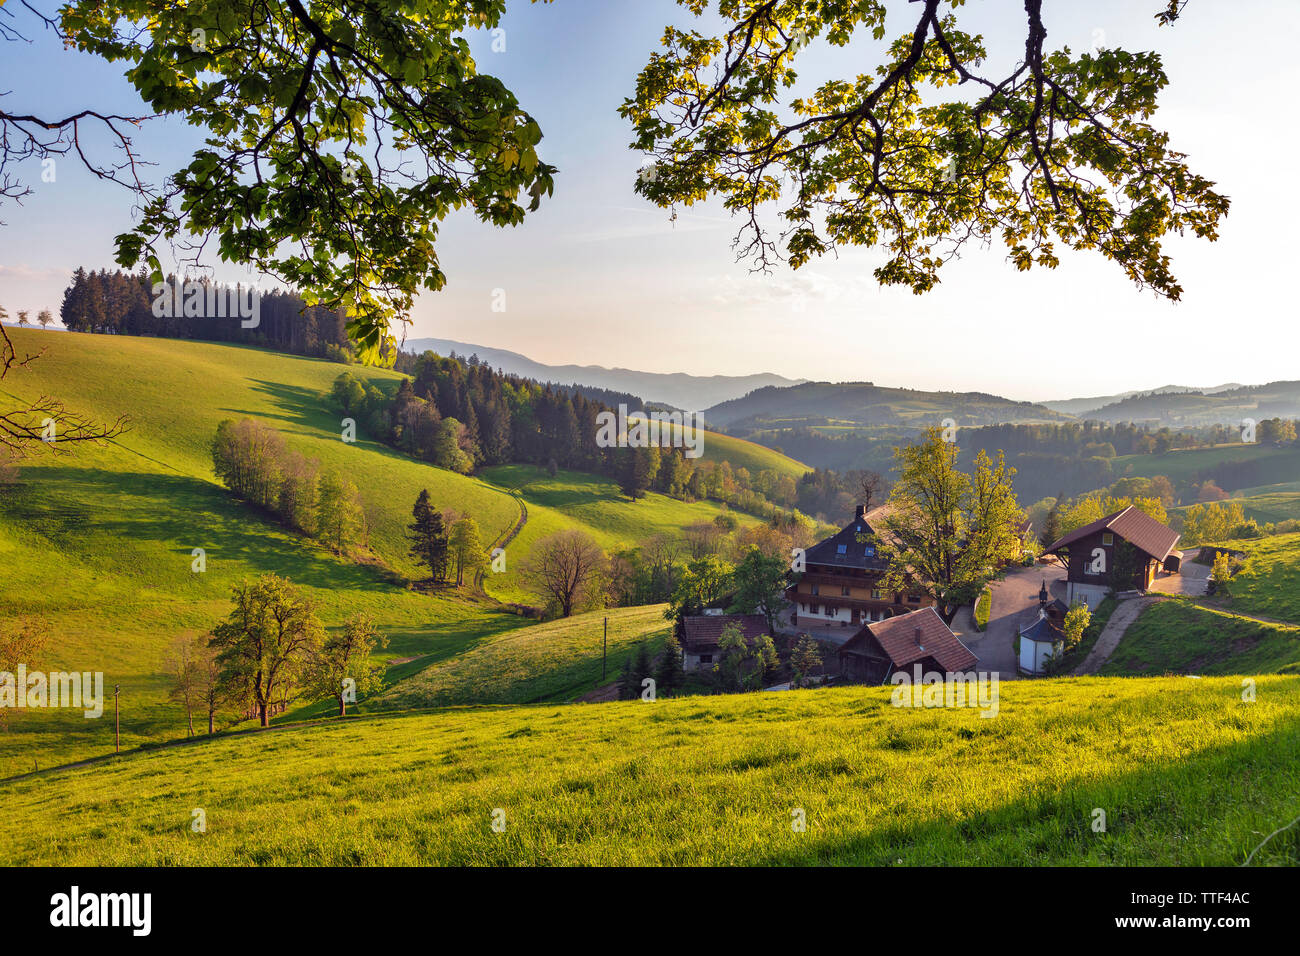 Casa de granja solitaria en el paisaje montañoso, St.Märgen, Selva Negra, Baden-Wurttemberg, Alemania Foto de stock